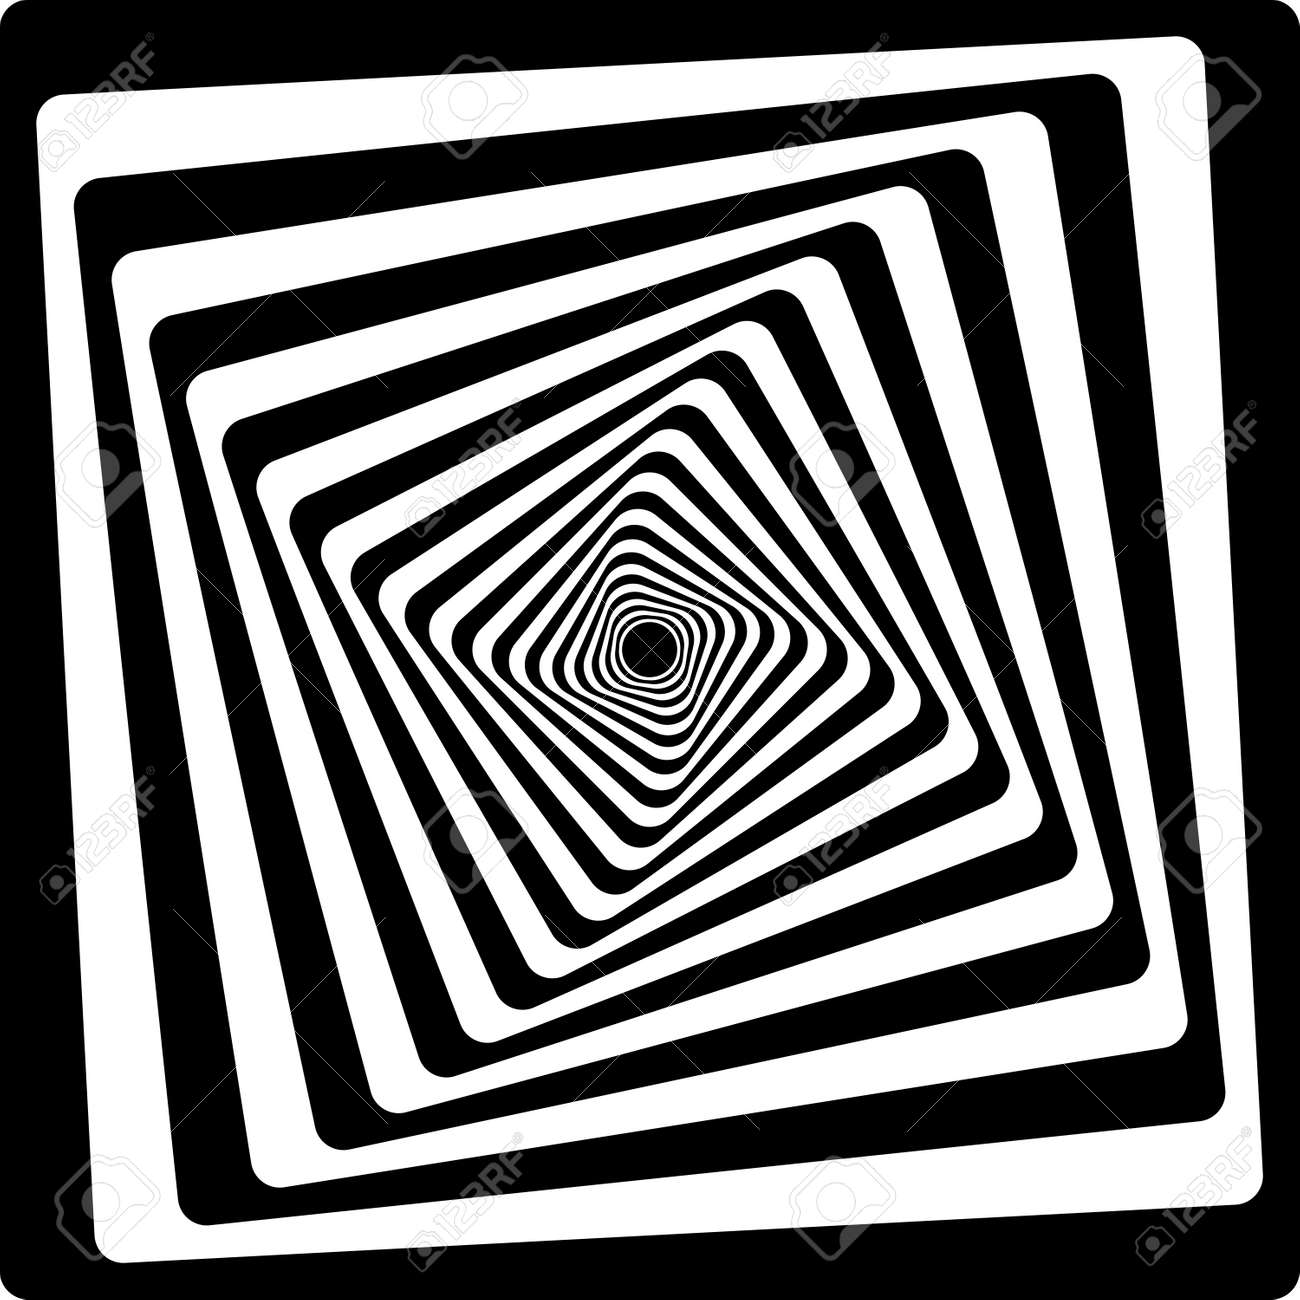 20643054-Hypnotic-eye-illusion-background-Stock-Vector.jpg